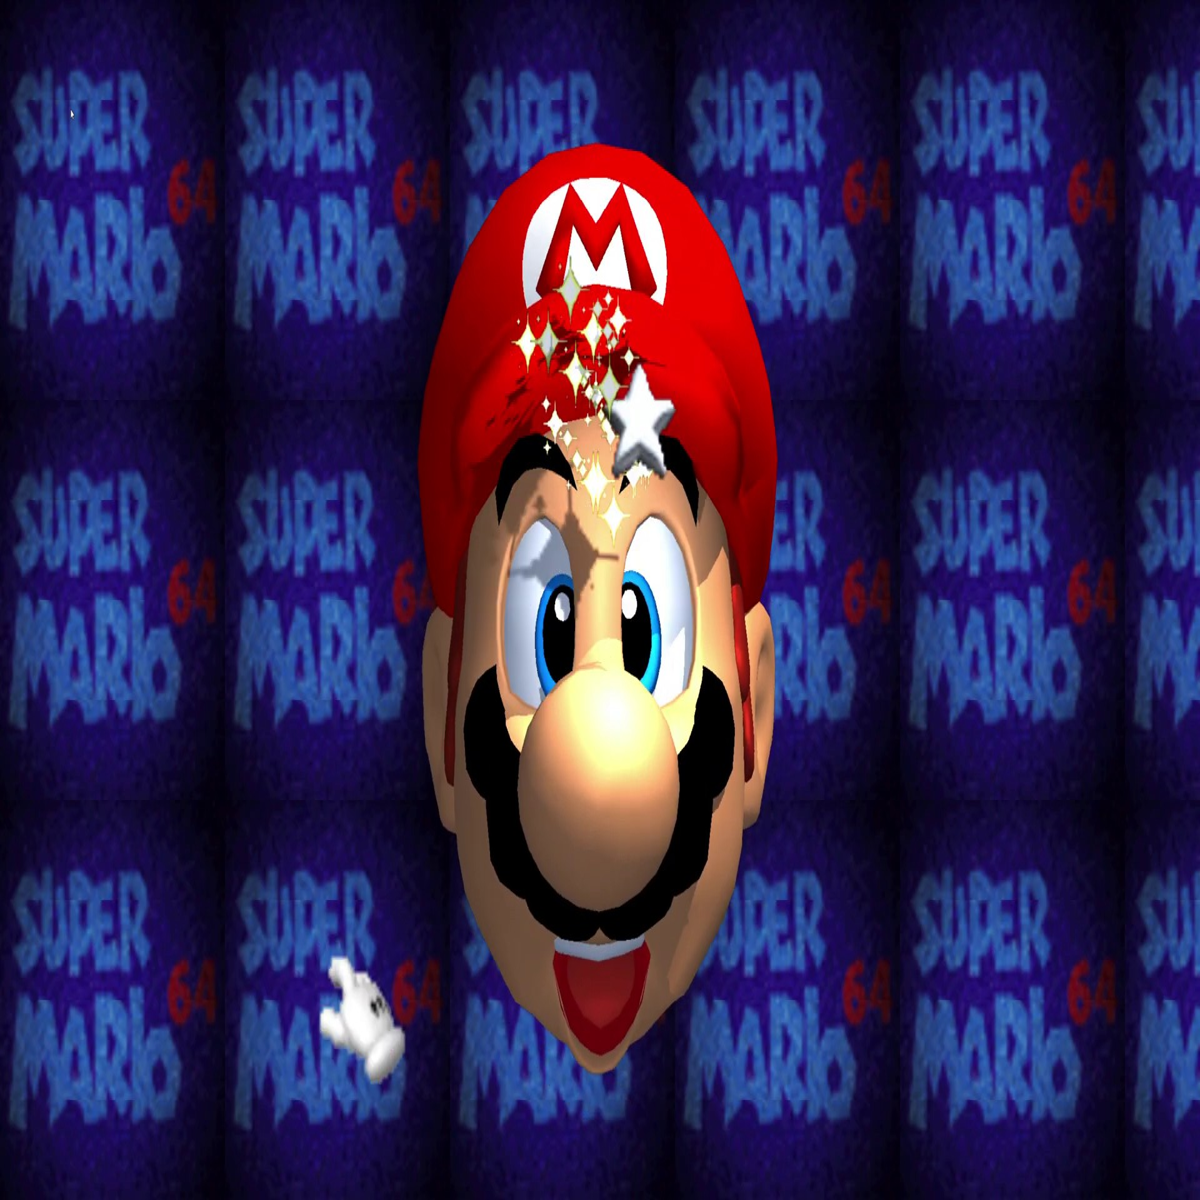 Super Mario 64 PC port gets modern mods